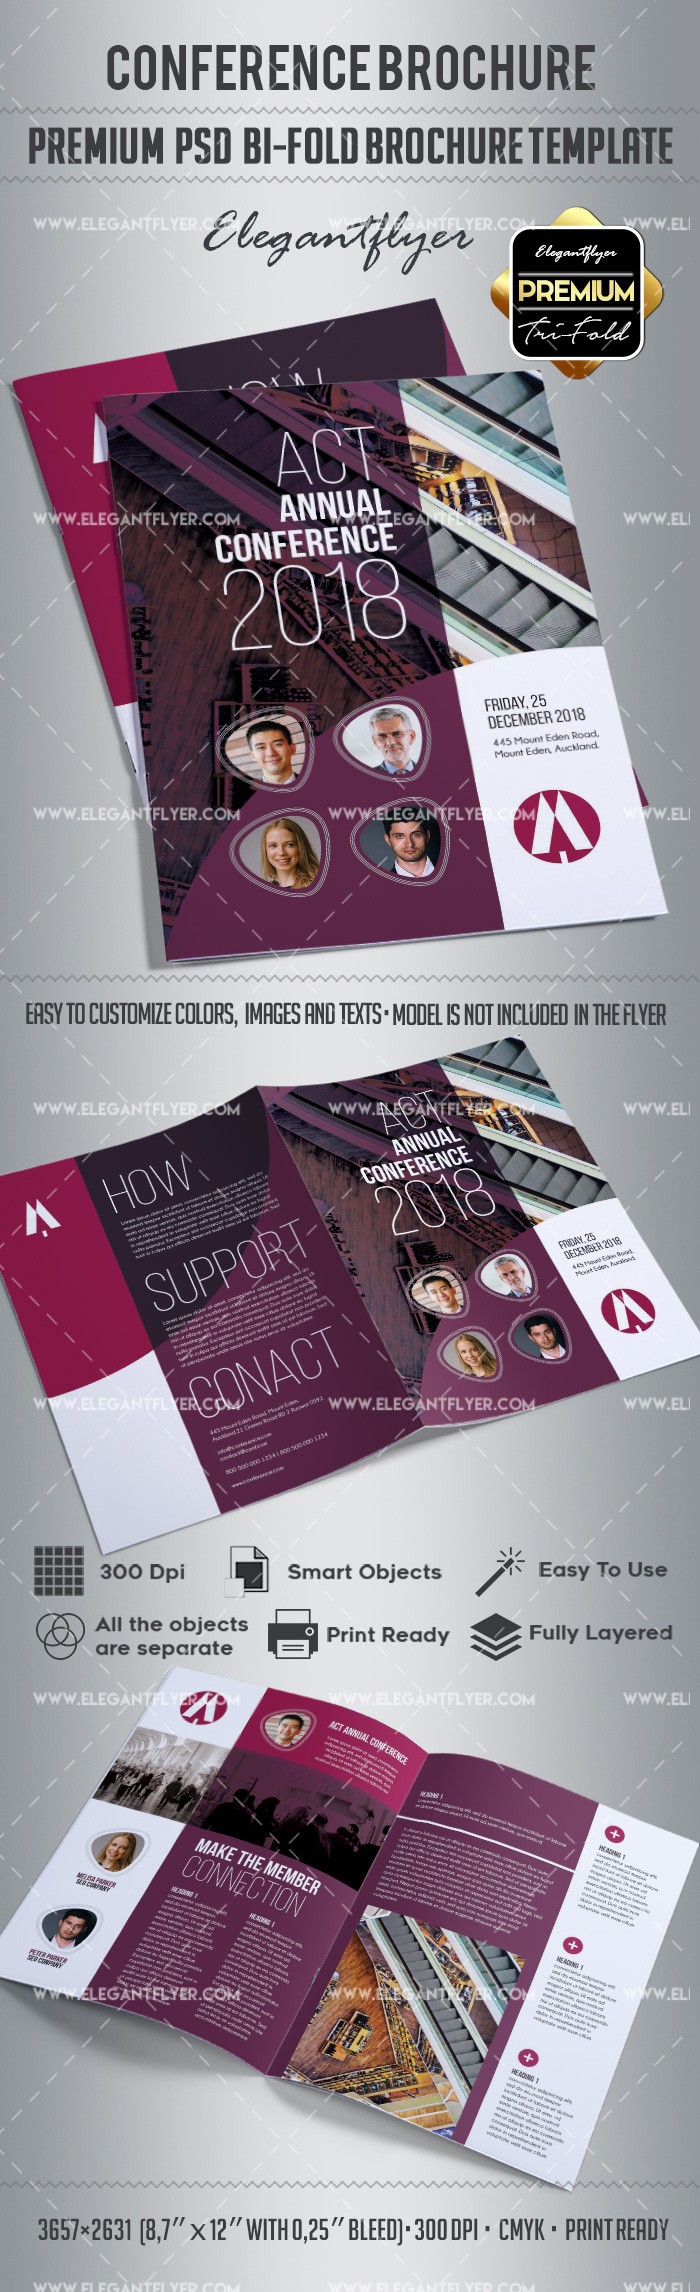 Annual Conference Bi-Fold Brochure by ElegantFlyer